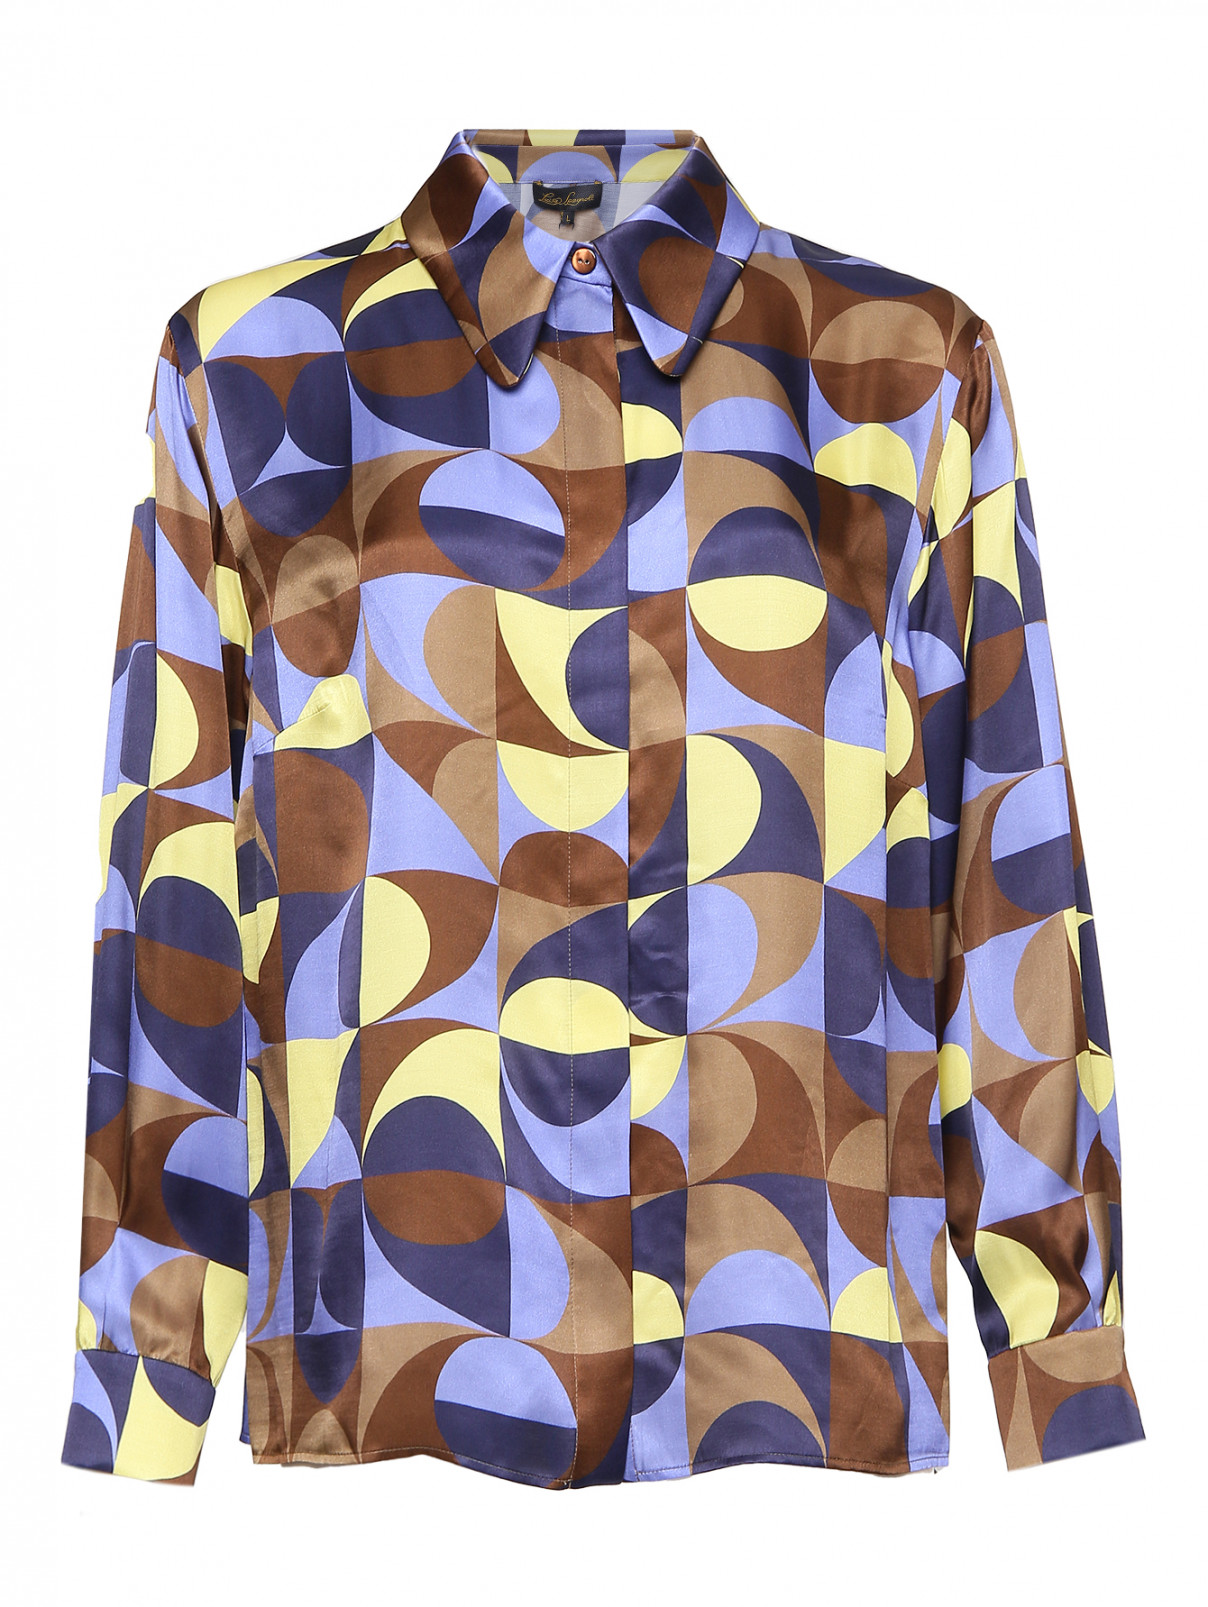 Блуза с узором Luisa Spagnoli  –  Общий вид  – Цвет:  Мультиколор